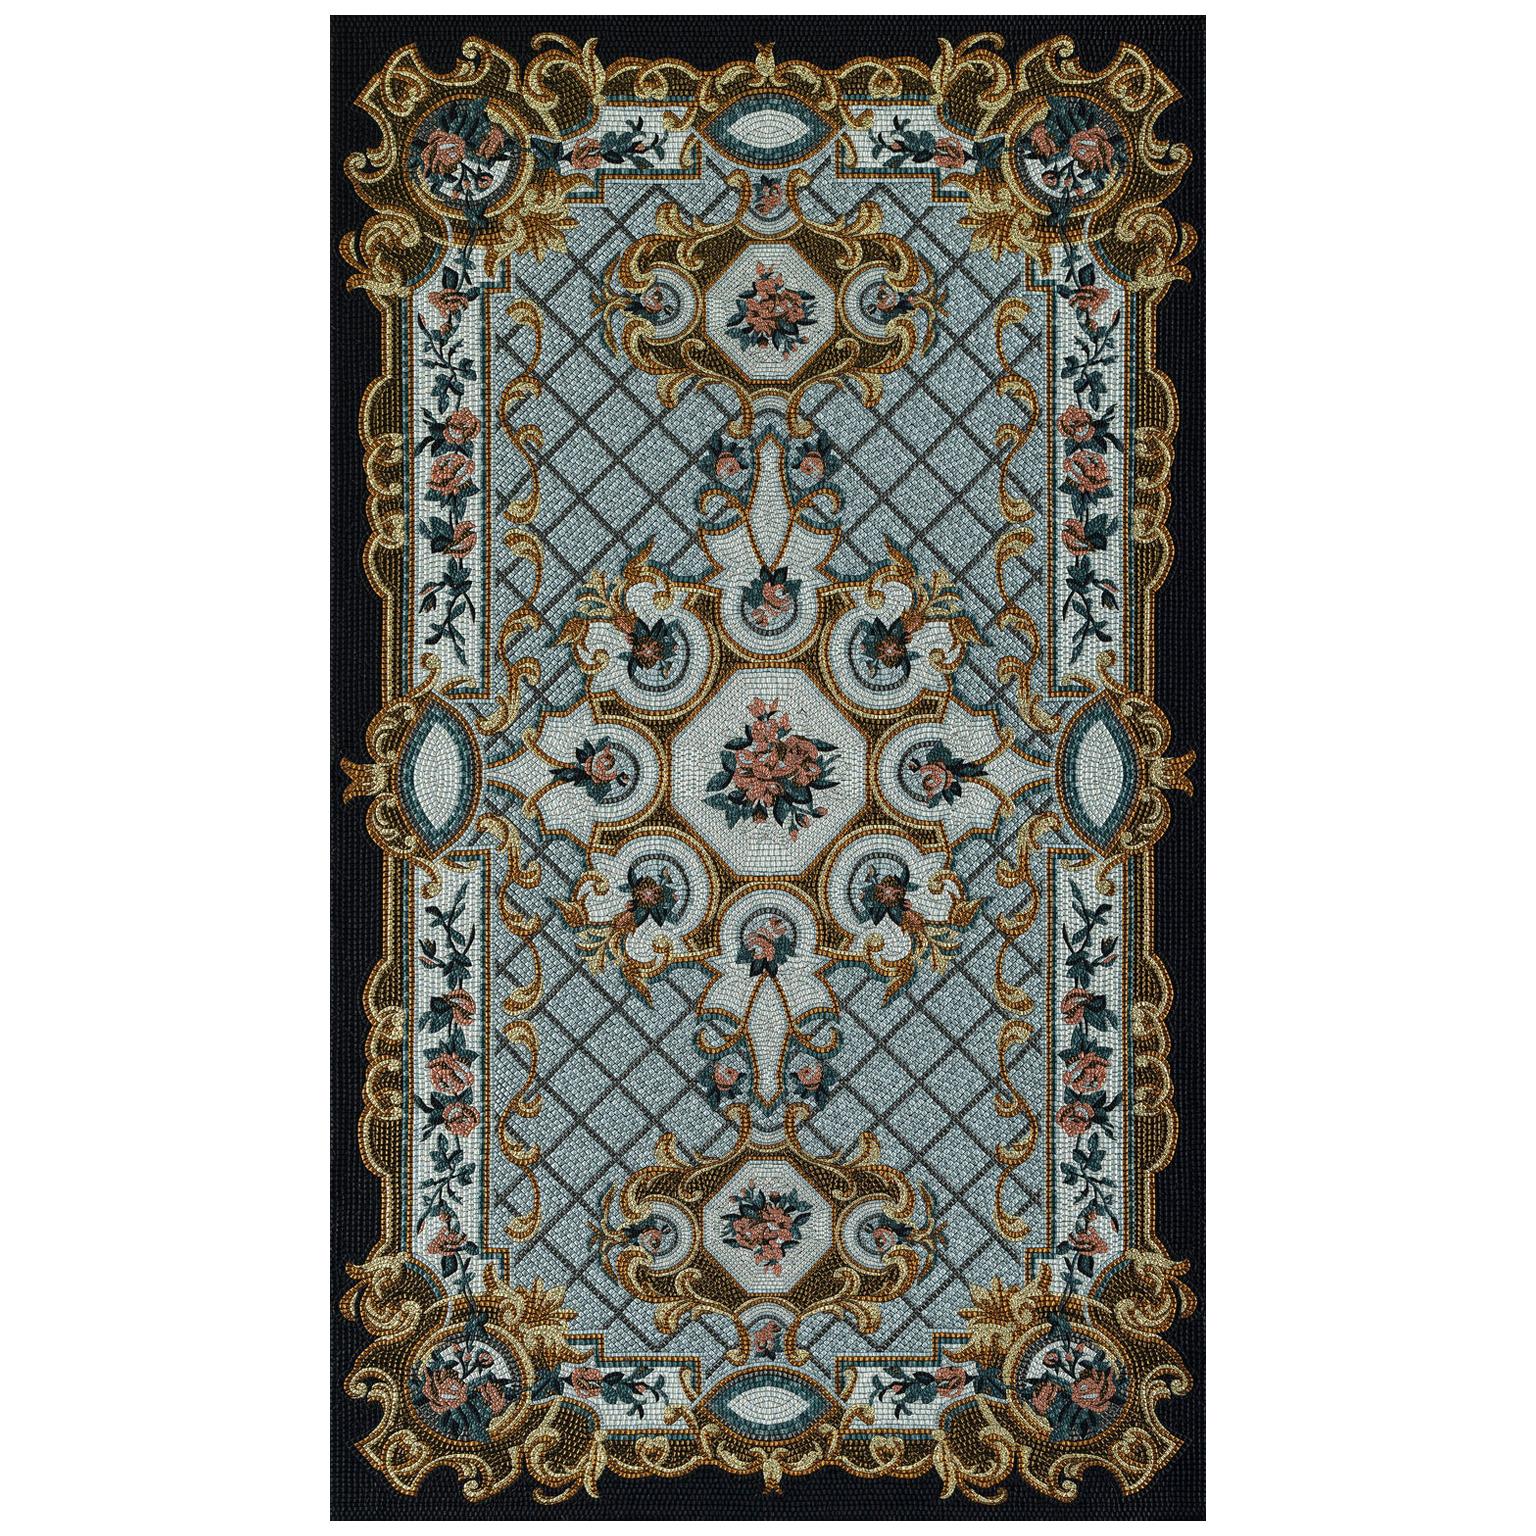 sicis Tapestries